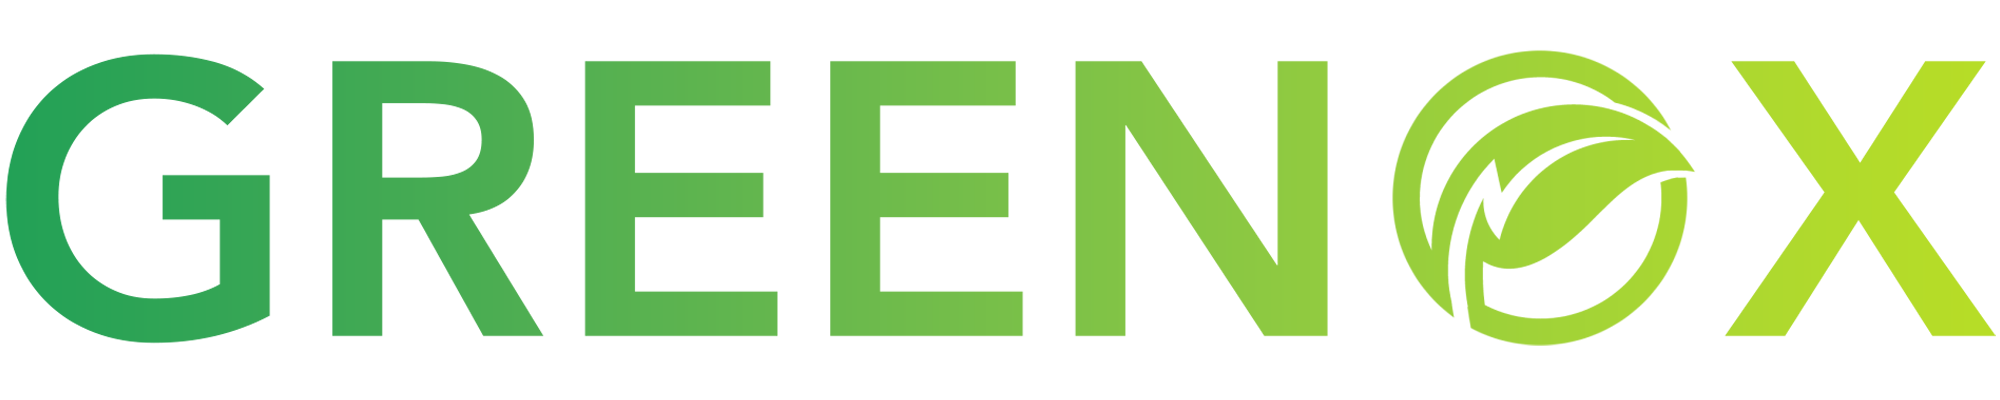 GREENOX GmbH logo